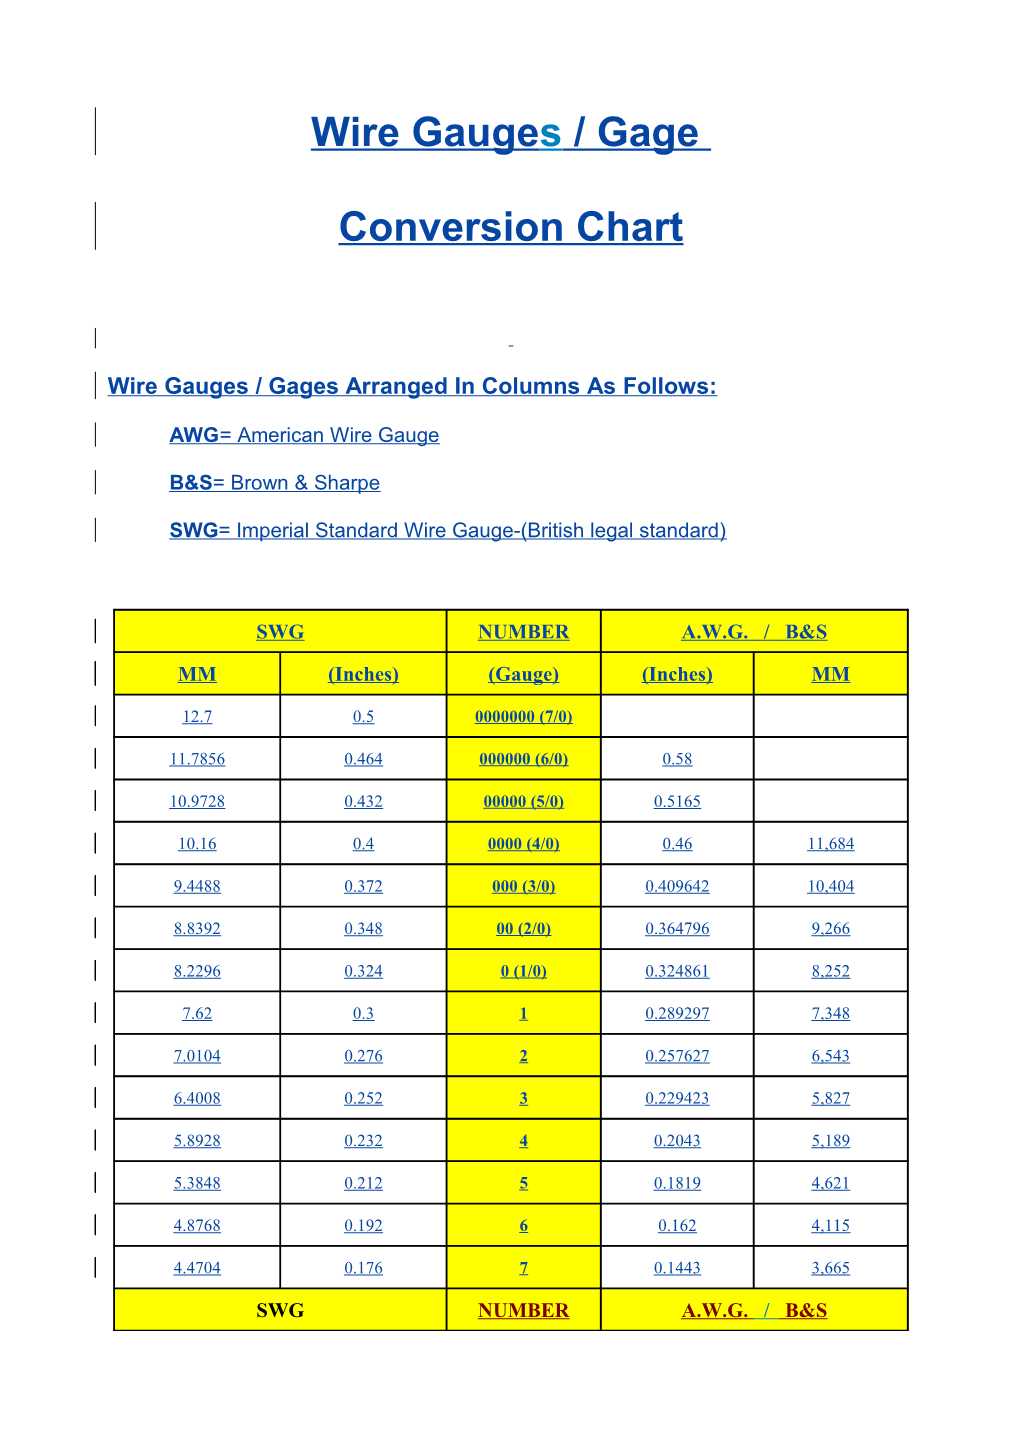 Wire Gauge / Gage Conversion Chart